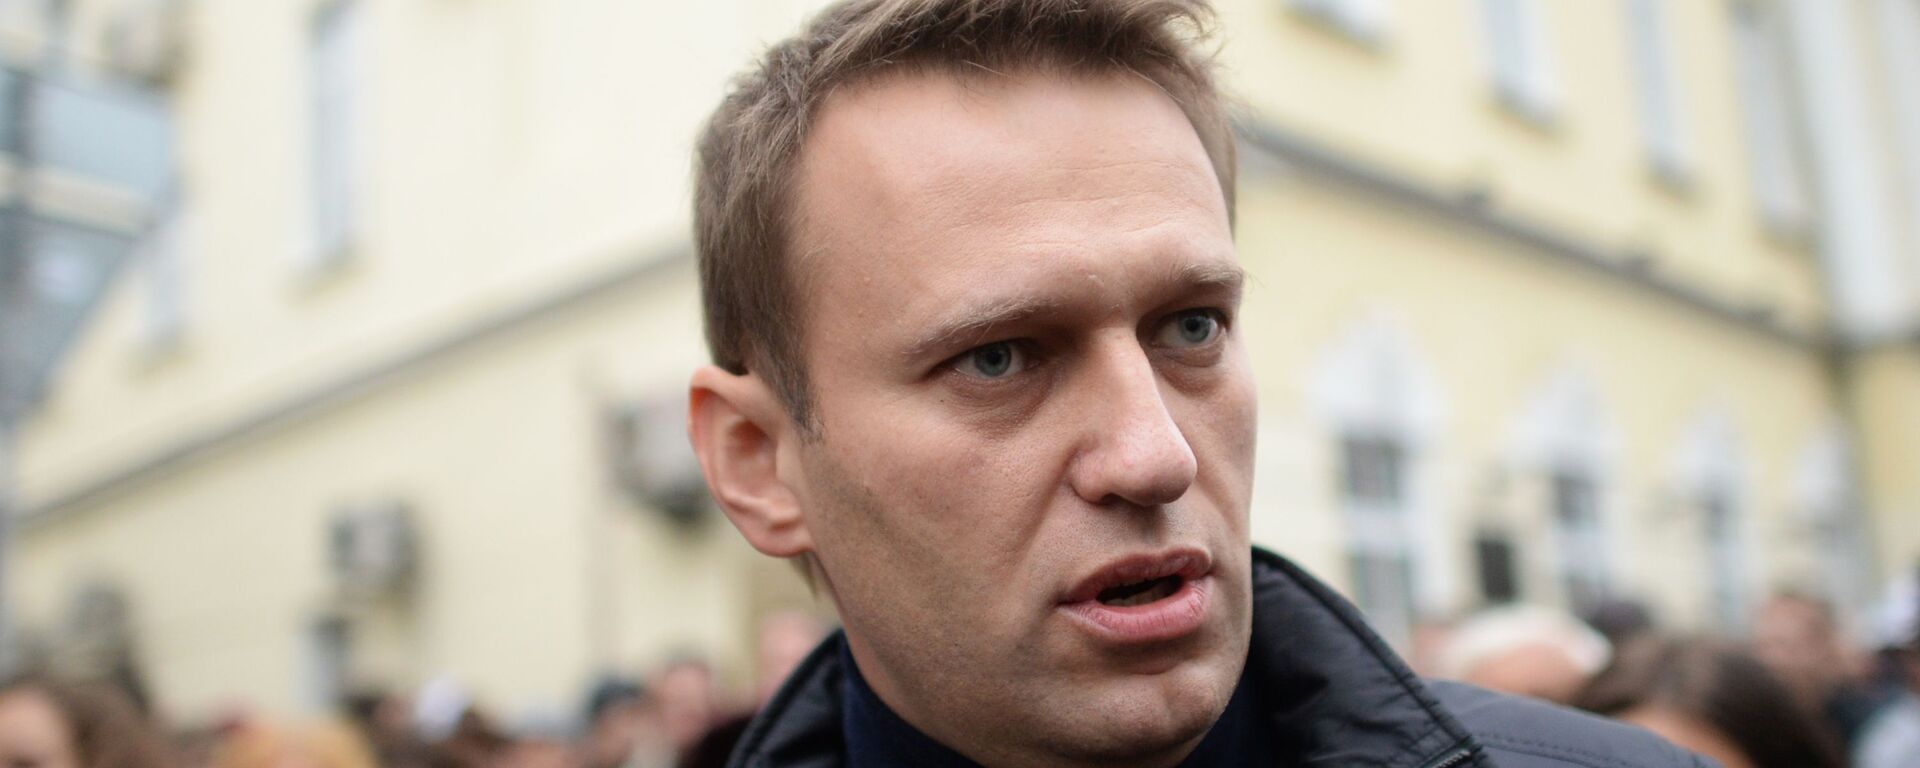 Alexéi Navalni, activista opositor ruso - Sputnik Mundo, 1920, 16.04.2021